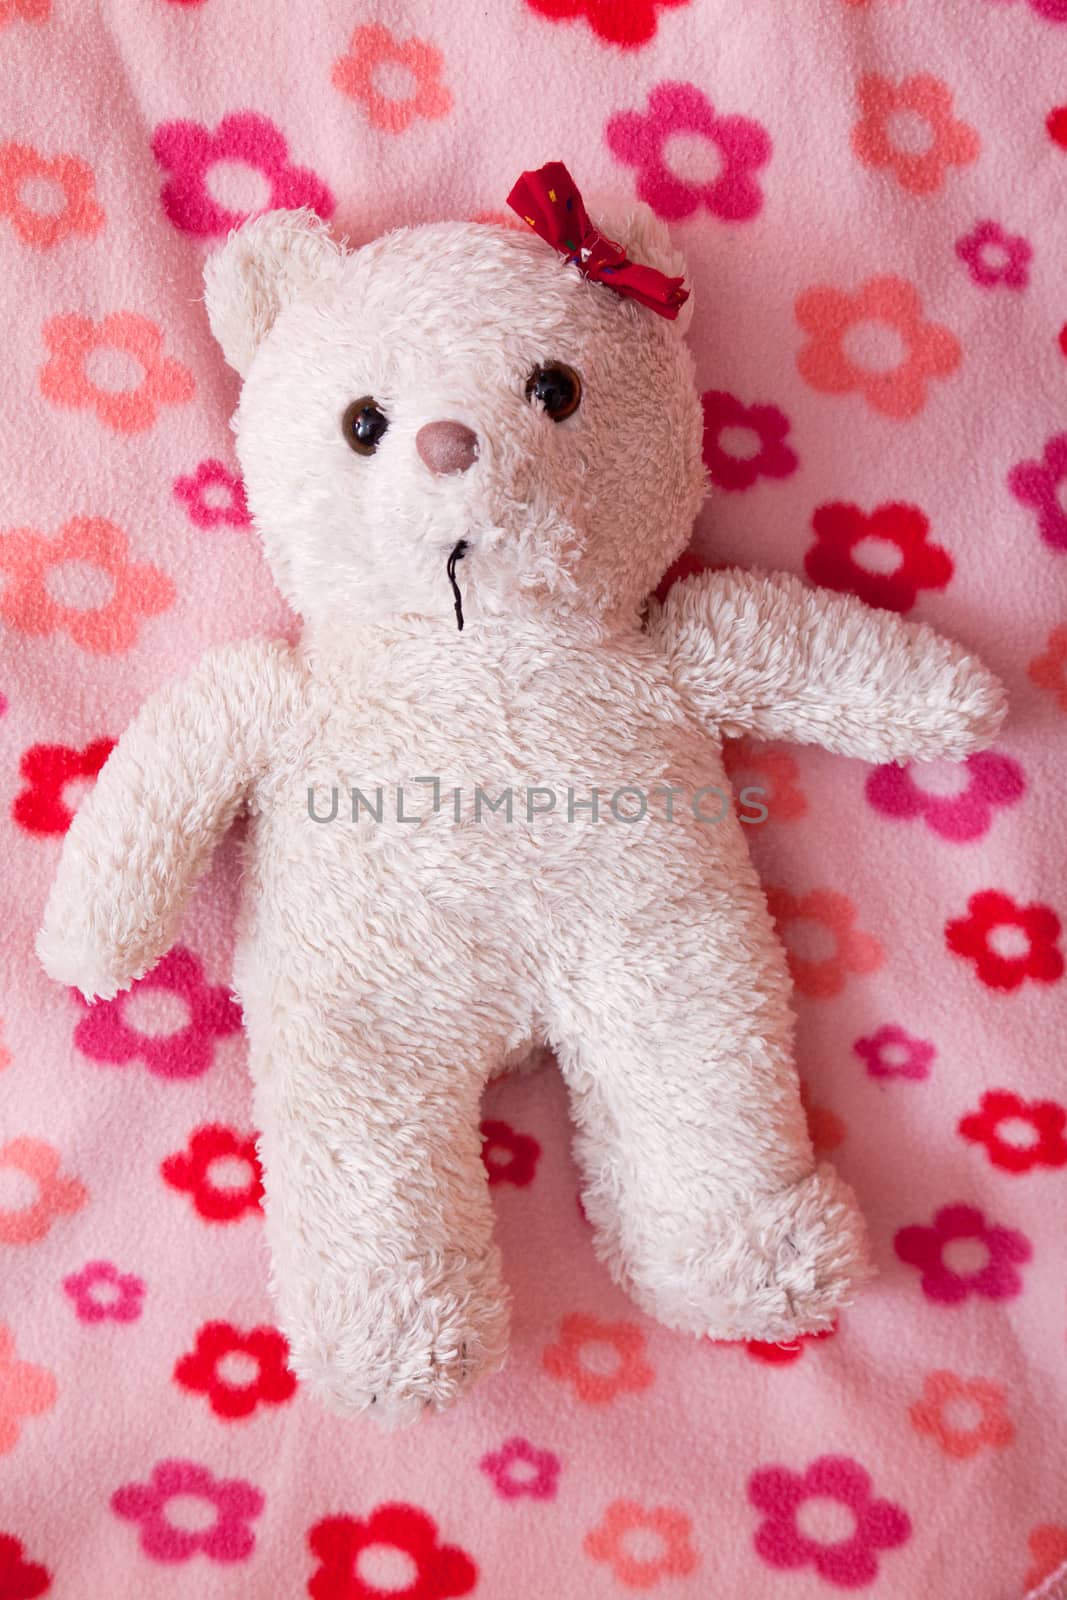 Little fluffy teddy bear by Portokalis